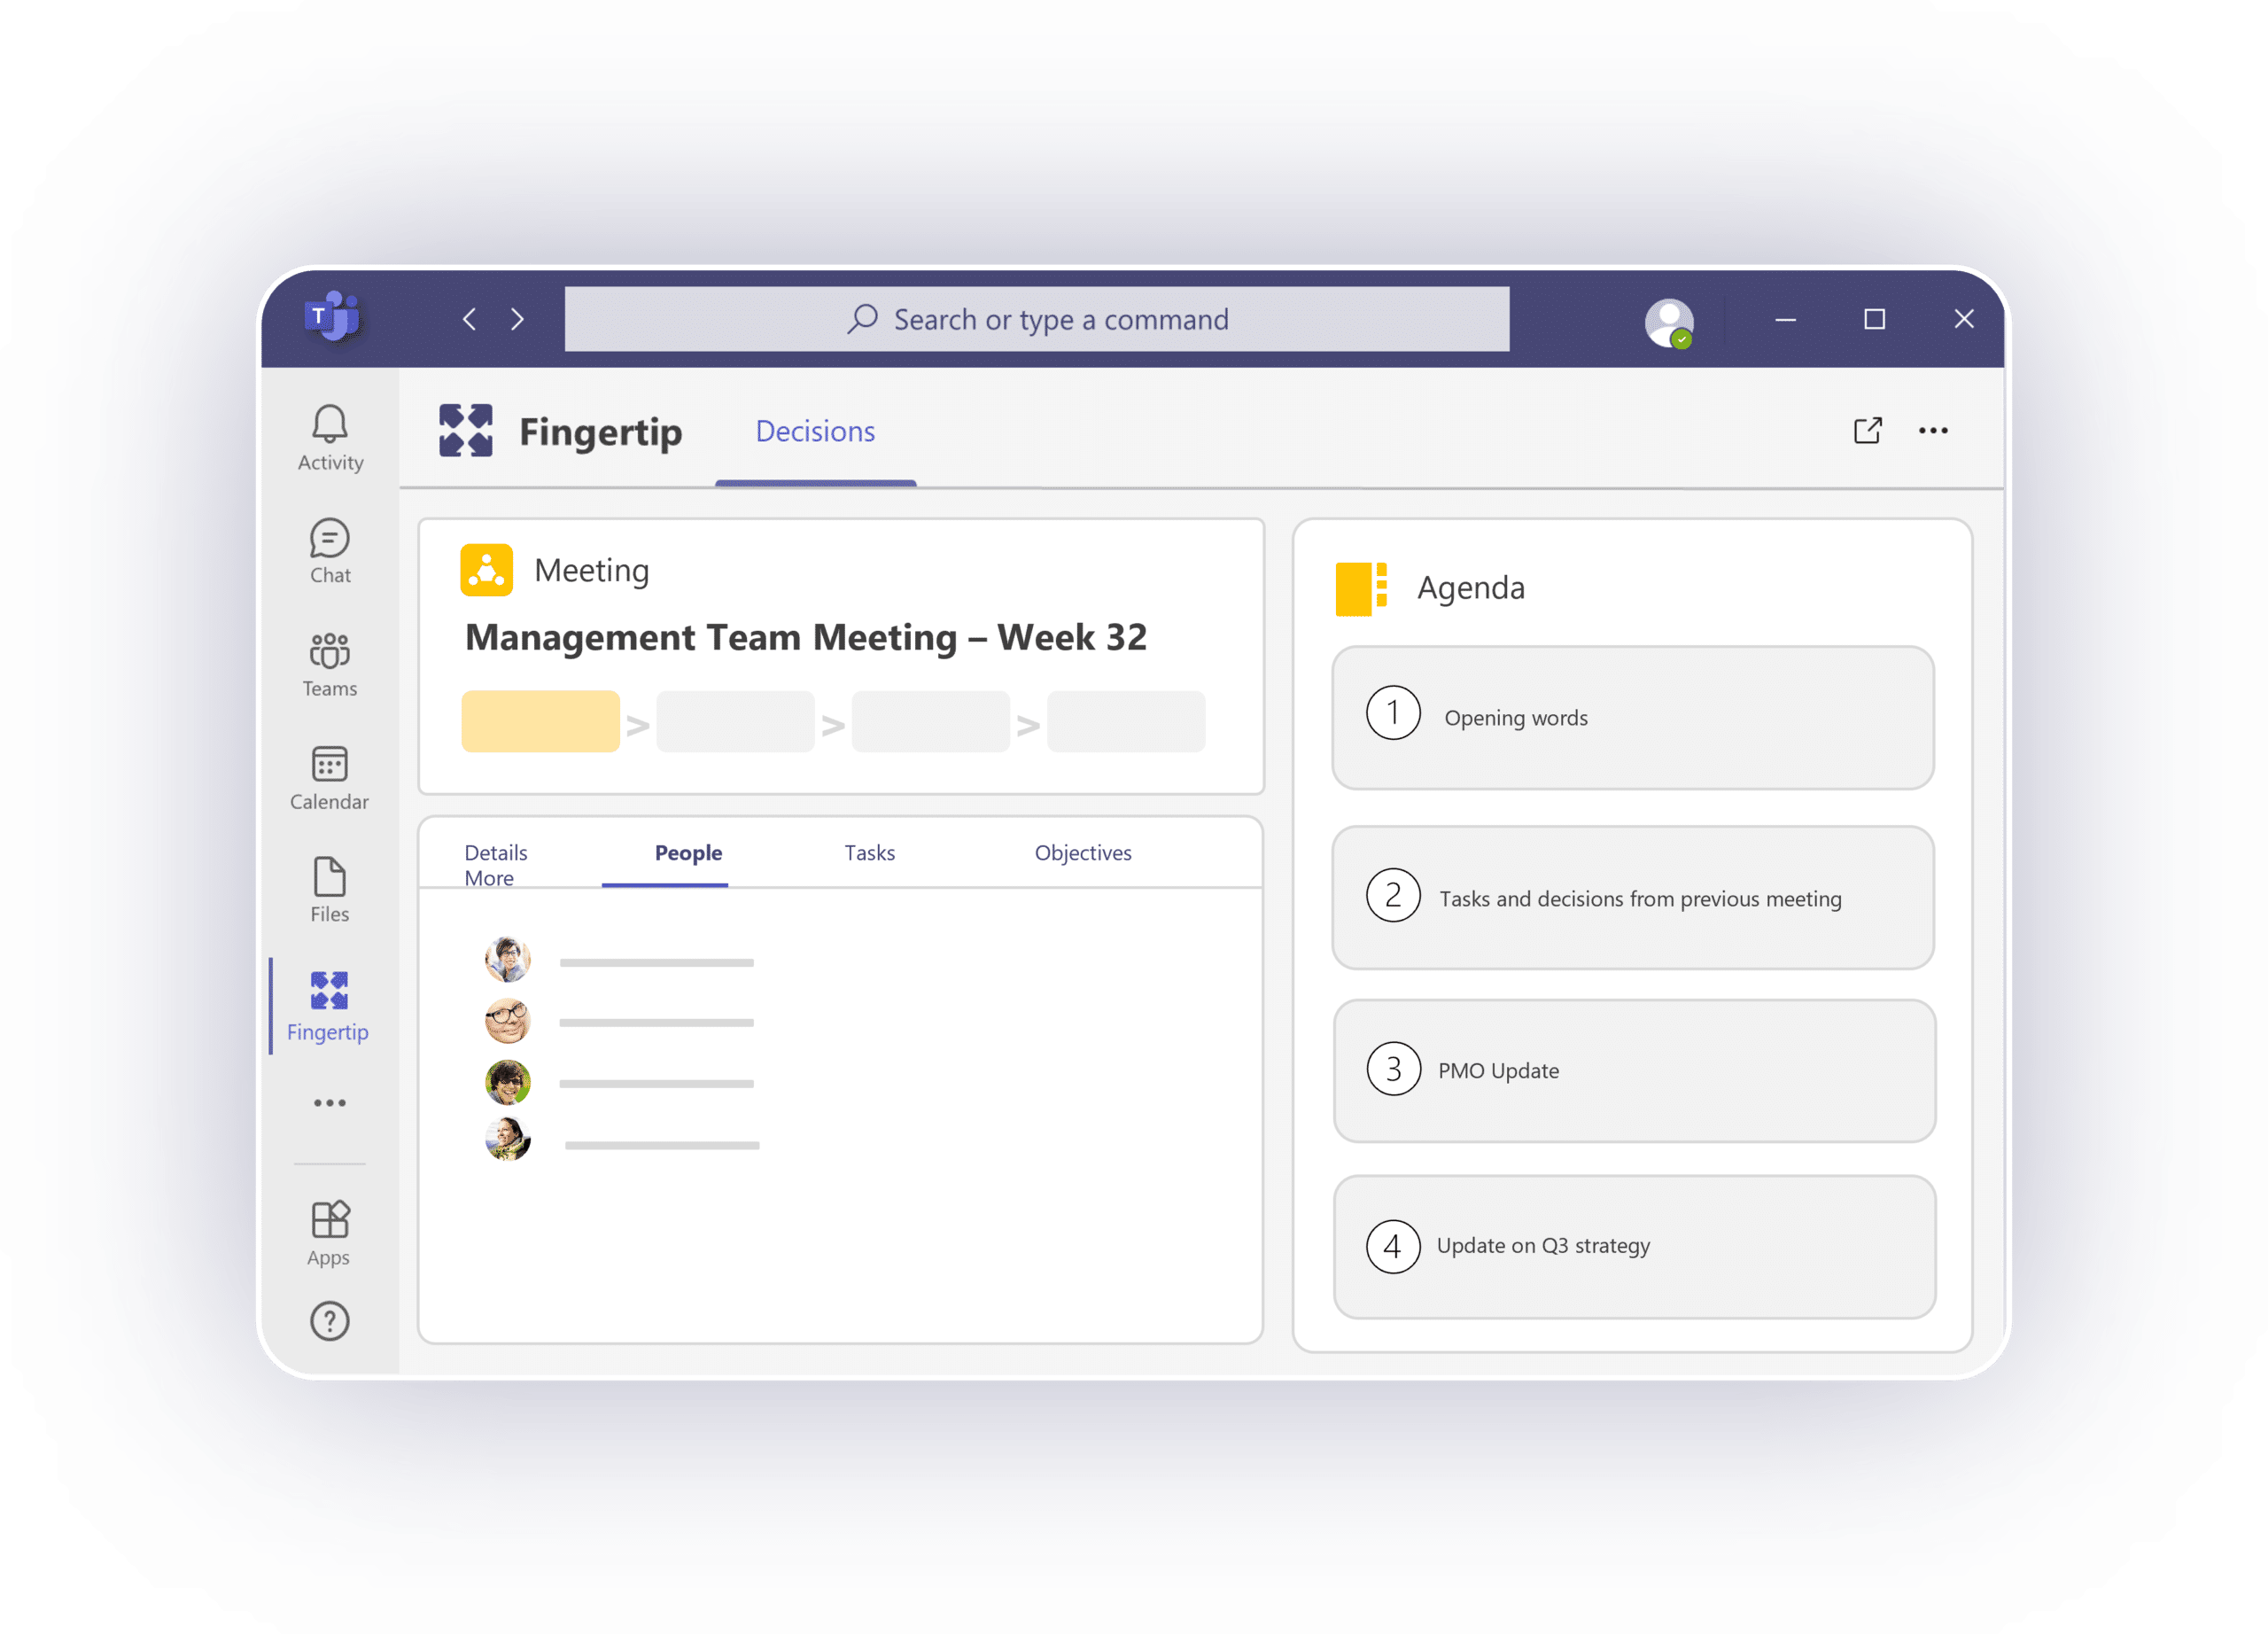 User interface mockup for meetings in Fingertip